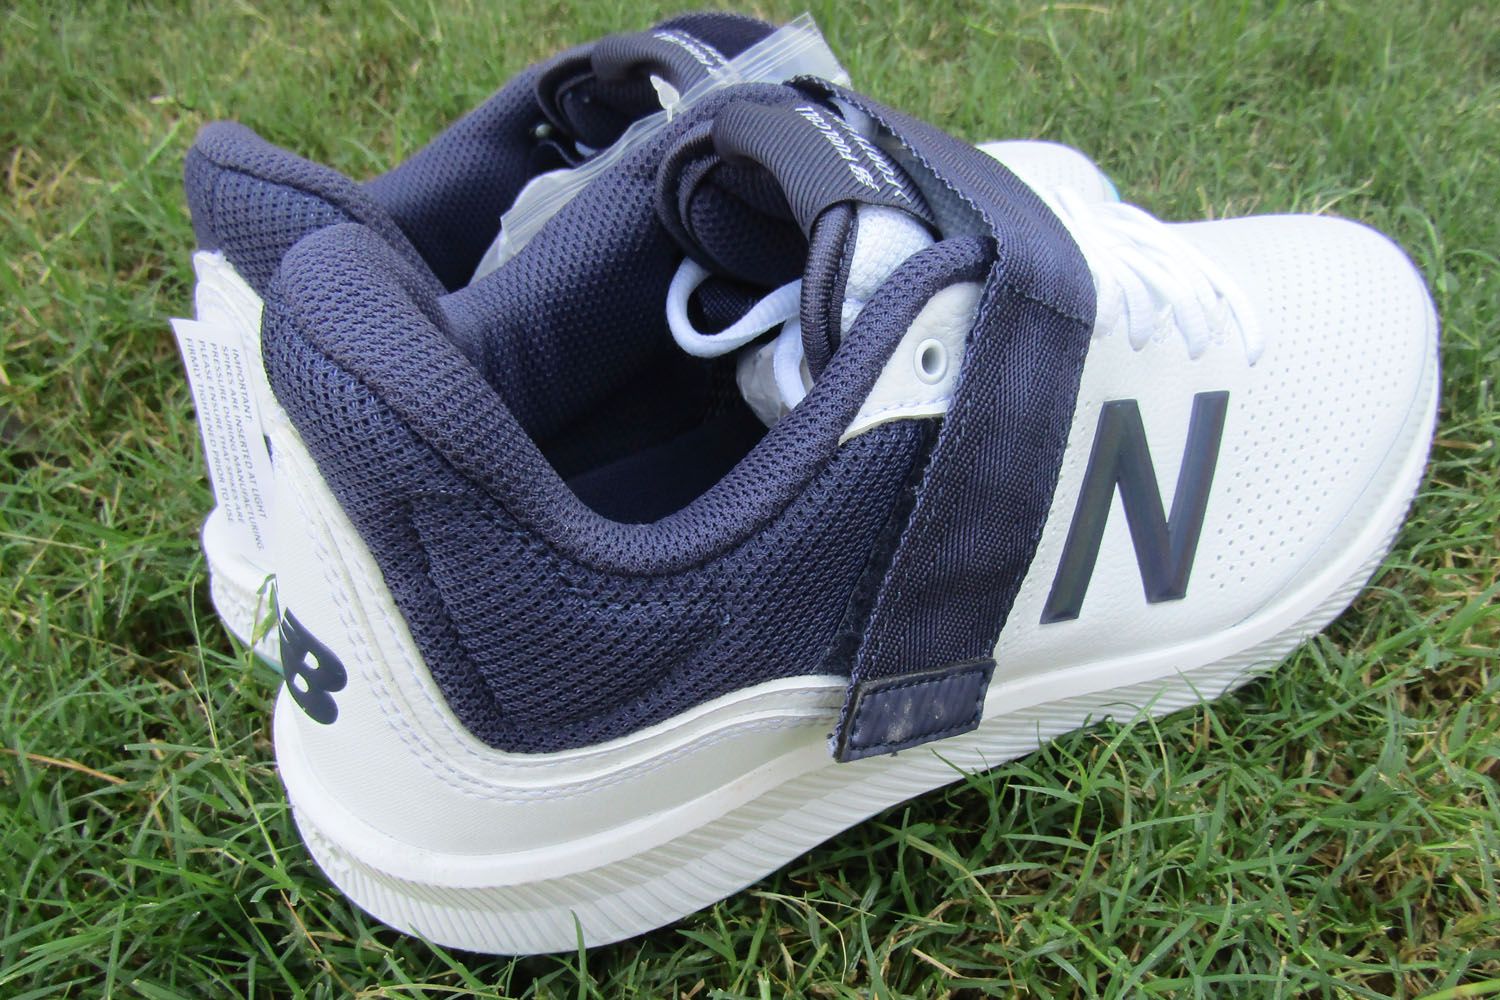 NB_cricket_shoes_